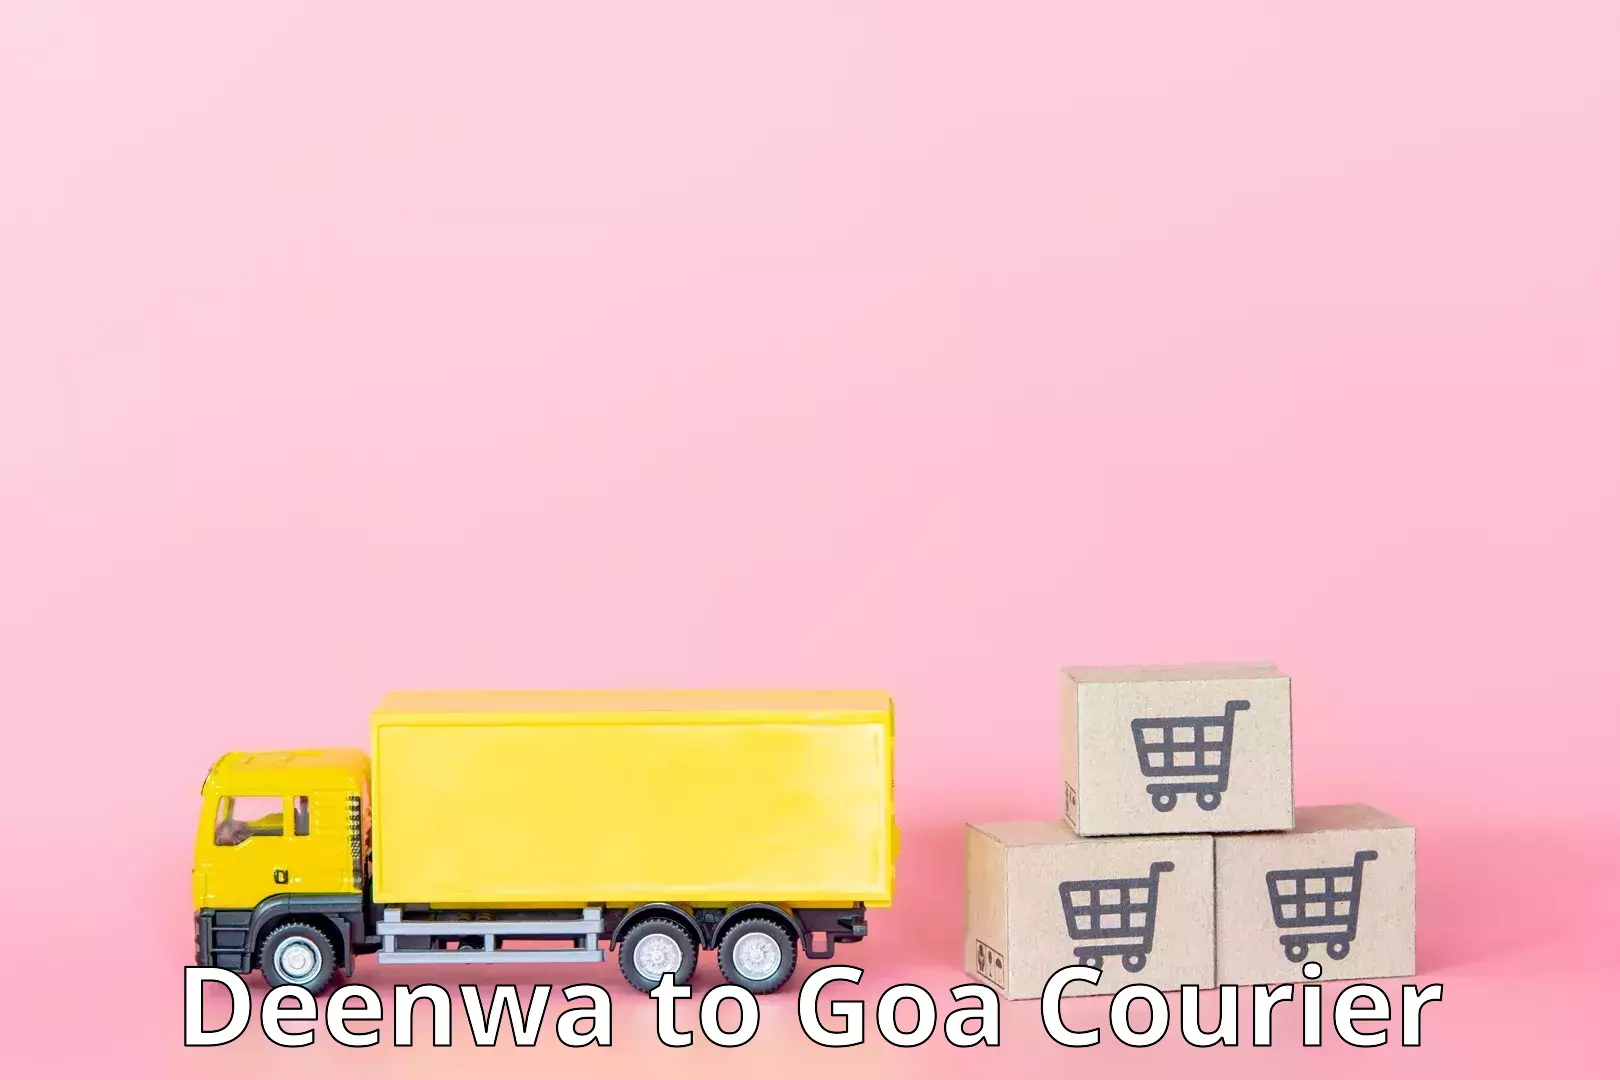 Professional courier handling Deenwa to Goa